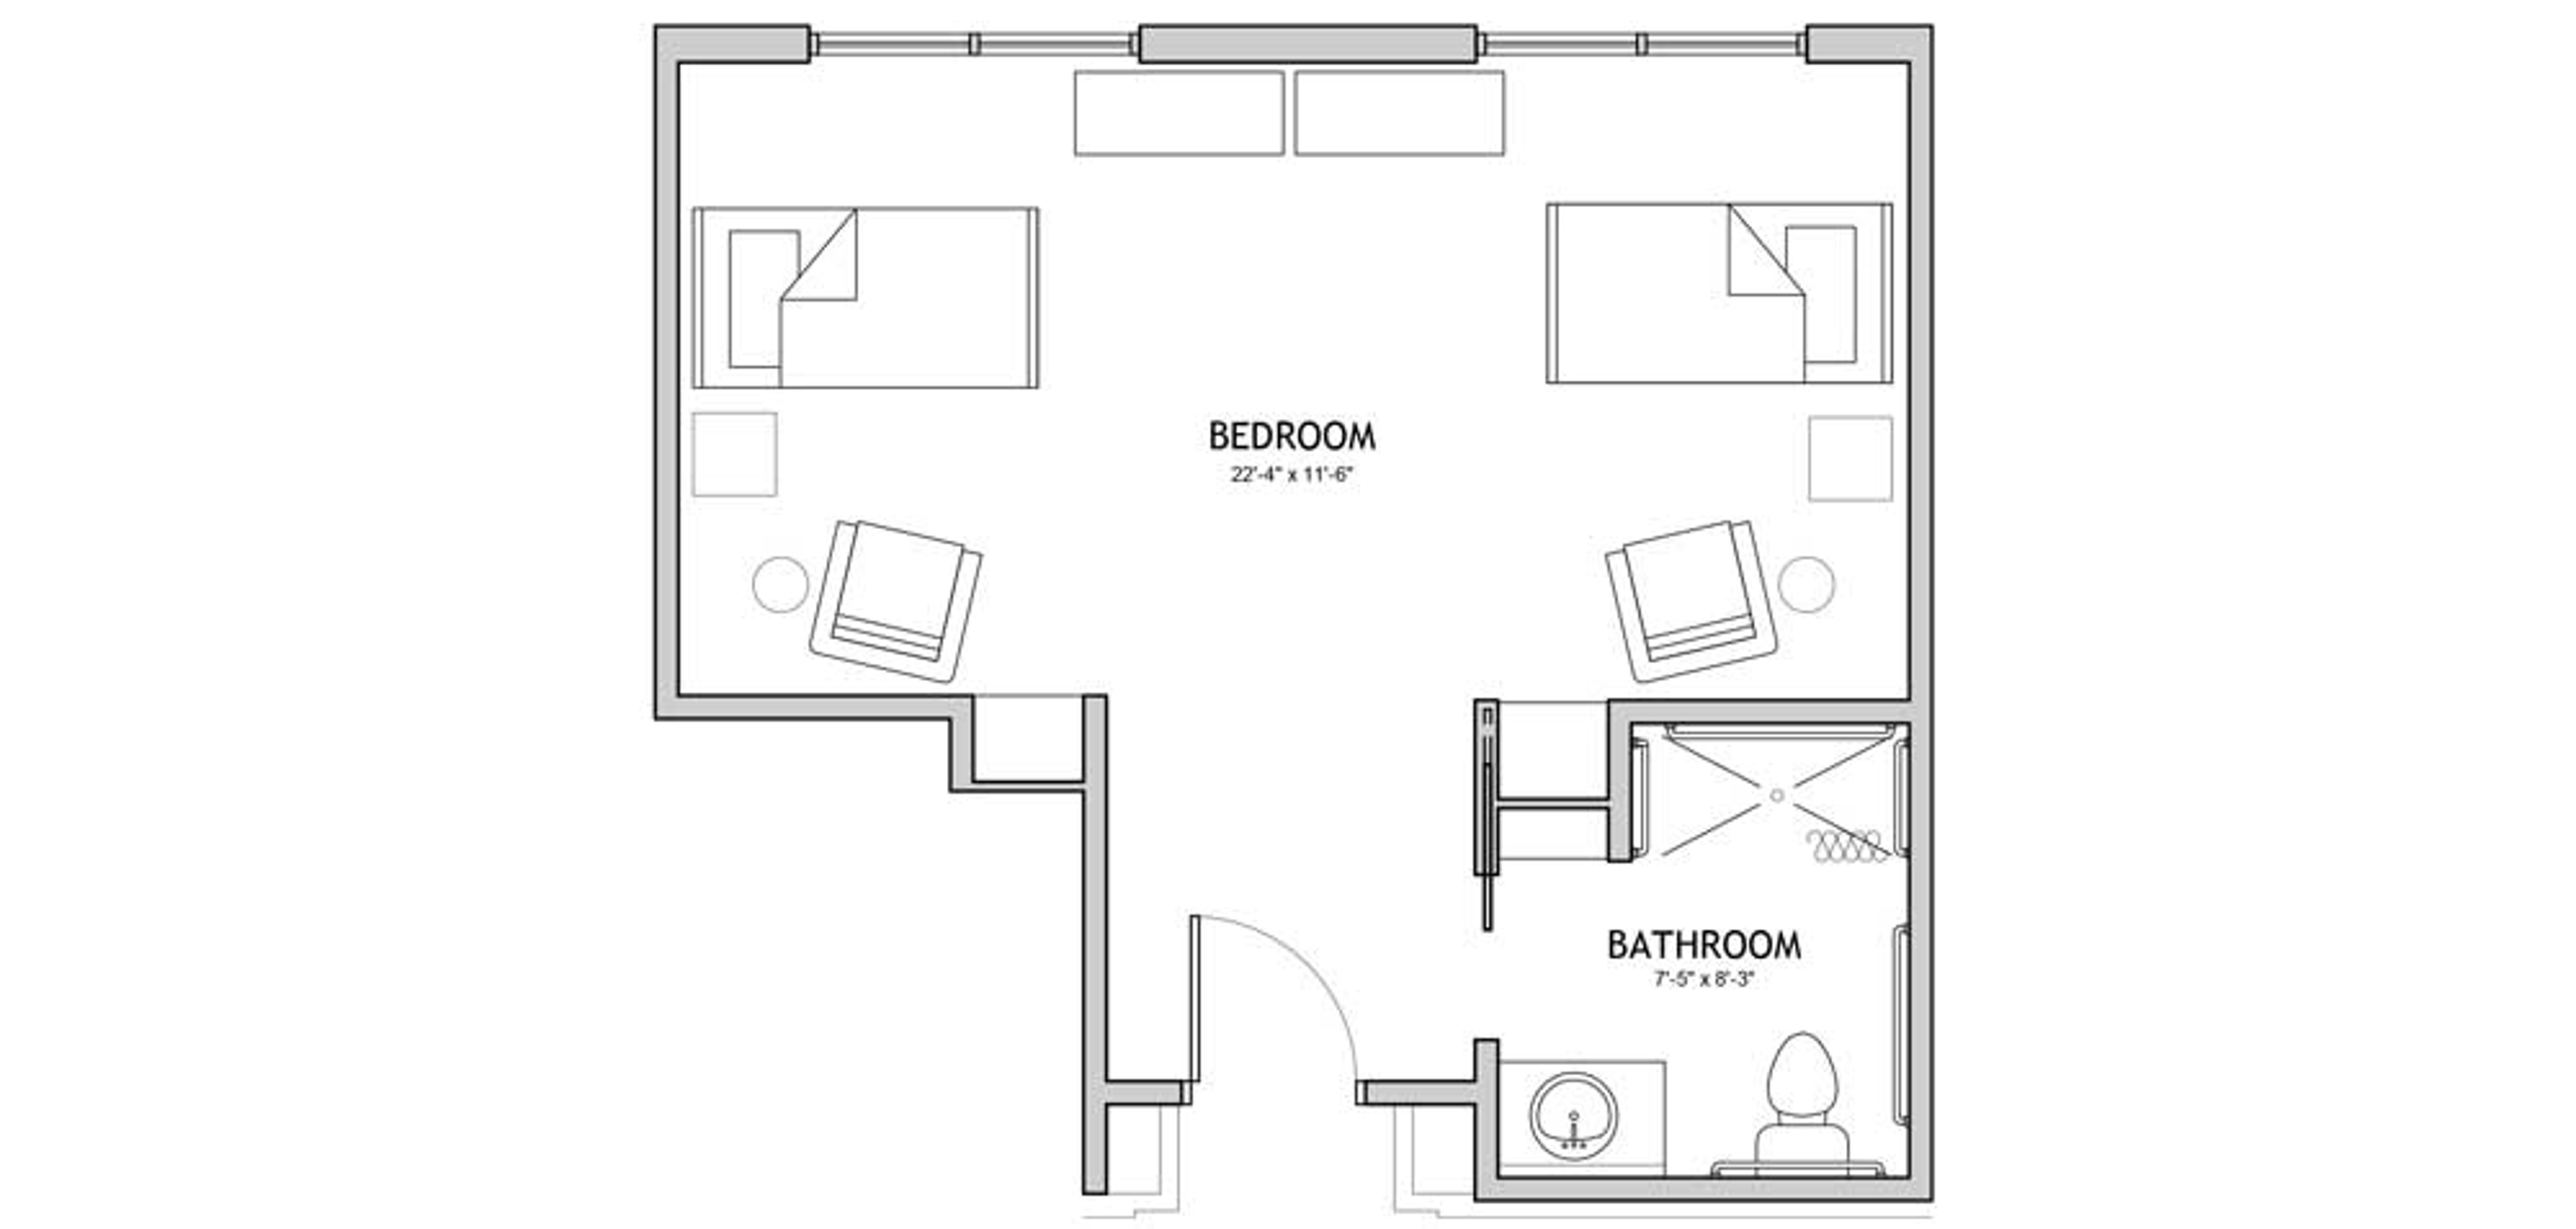 Floorplan - The Auberge at Onion Creek - 1 bed, 1 bath, 407 sq. ft. Memory Care